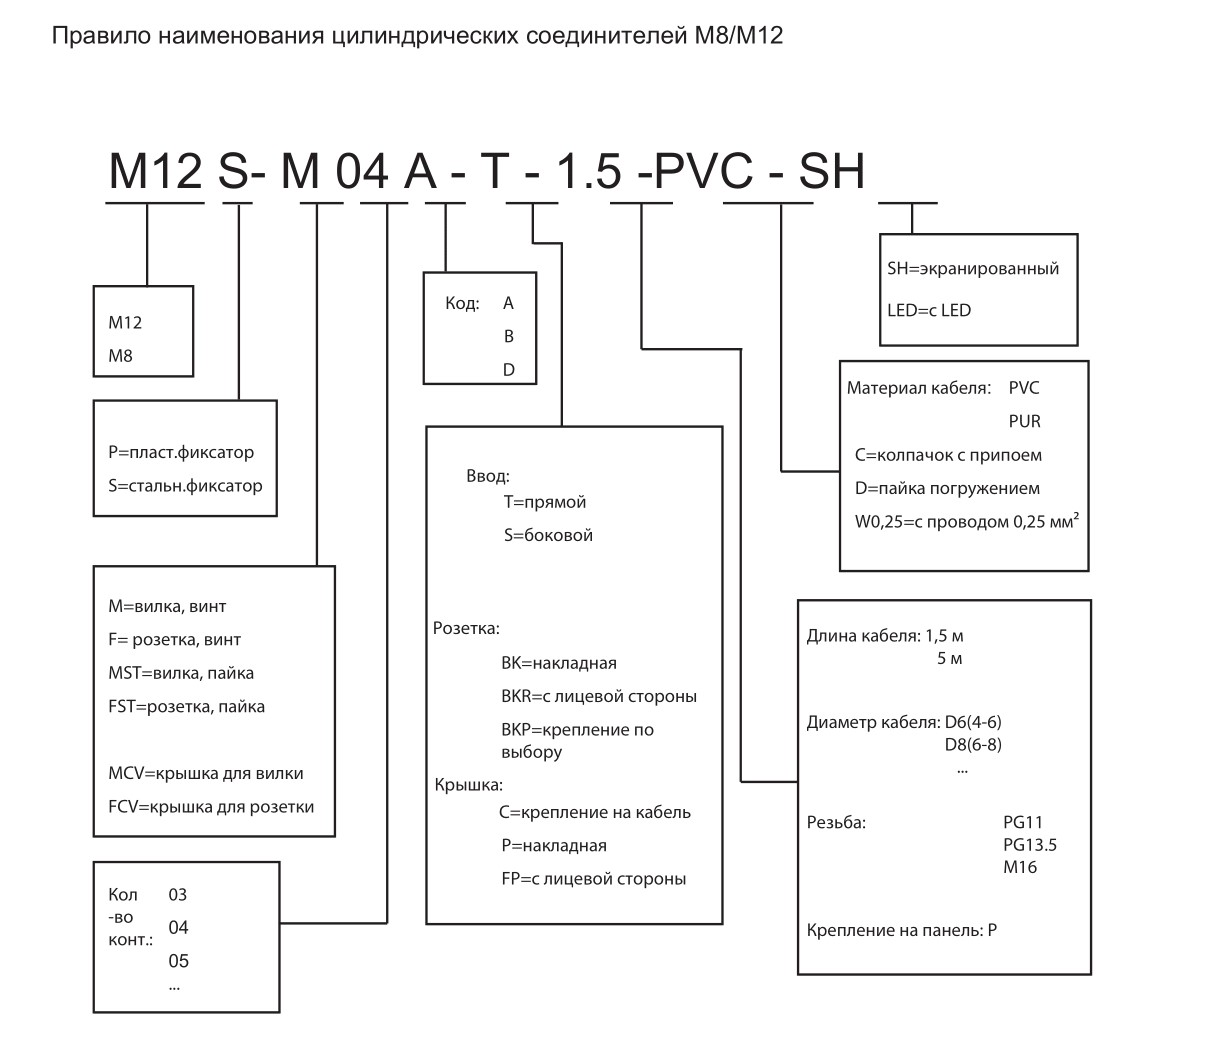 Цилиндрический соединитель-вилка с кабелем M8-M04-S-5.0-PUR 1620045014042: Структура обозначения